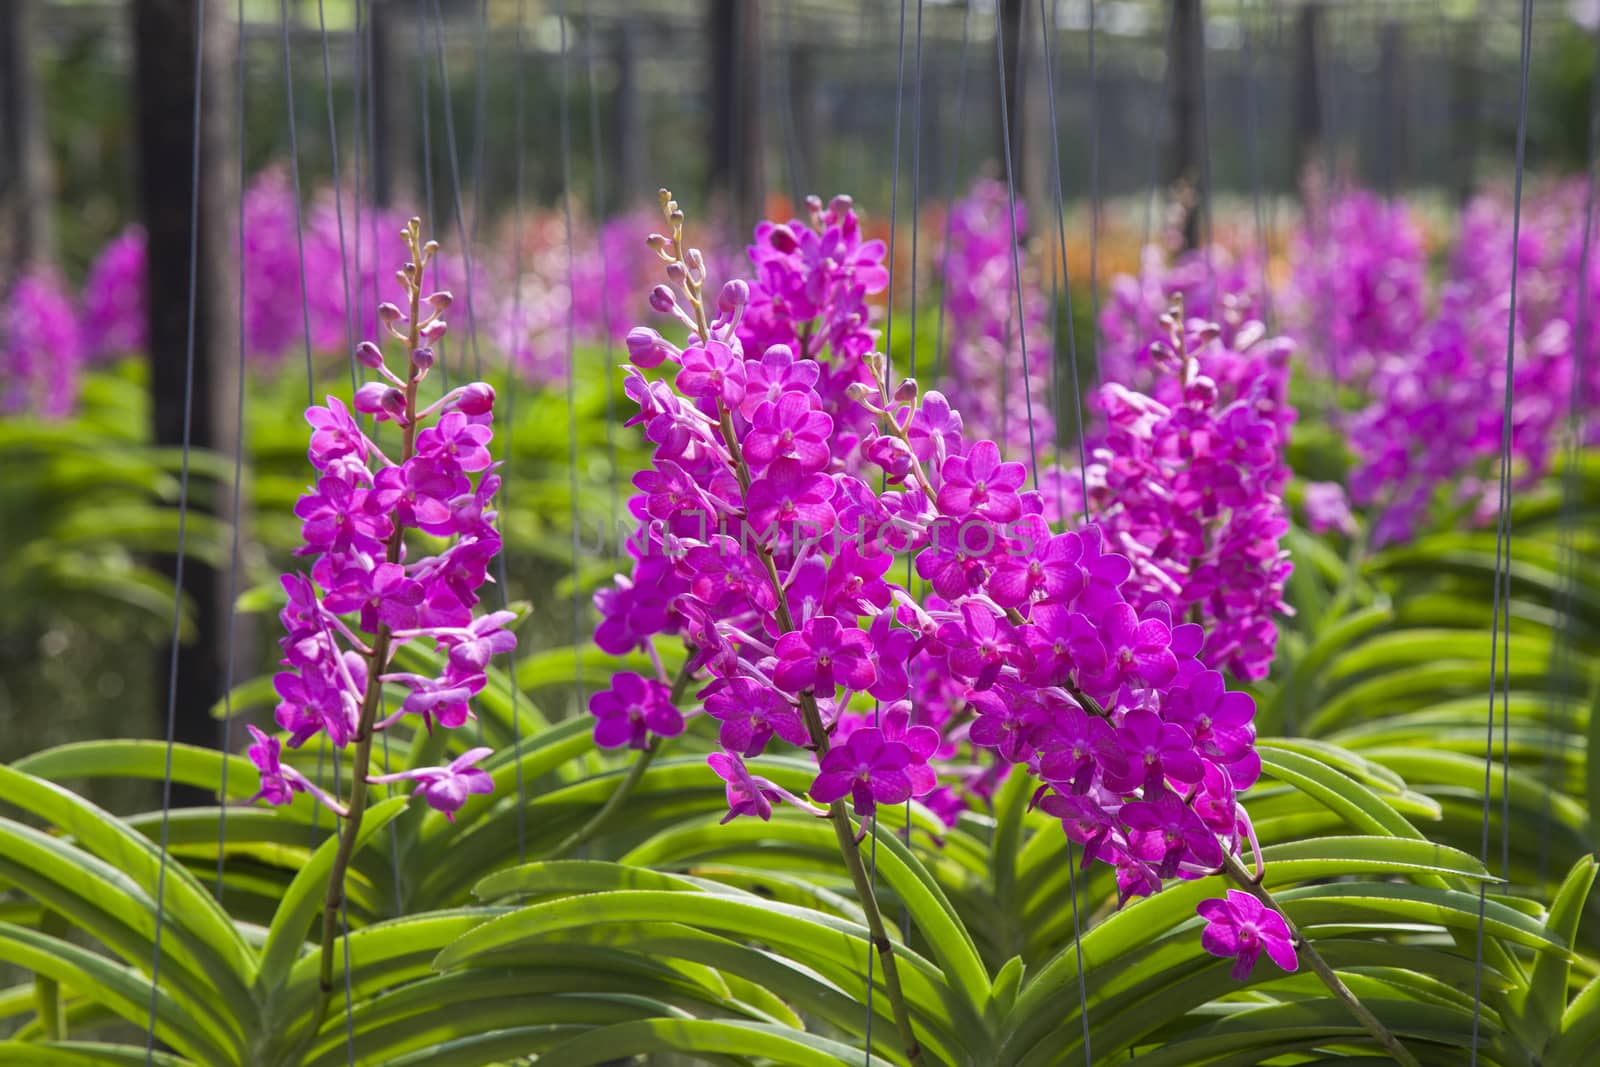 Vanda Orchid flower in tropical garden. Floral background.Selective focus.